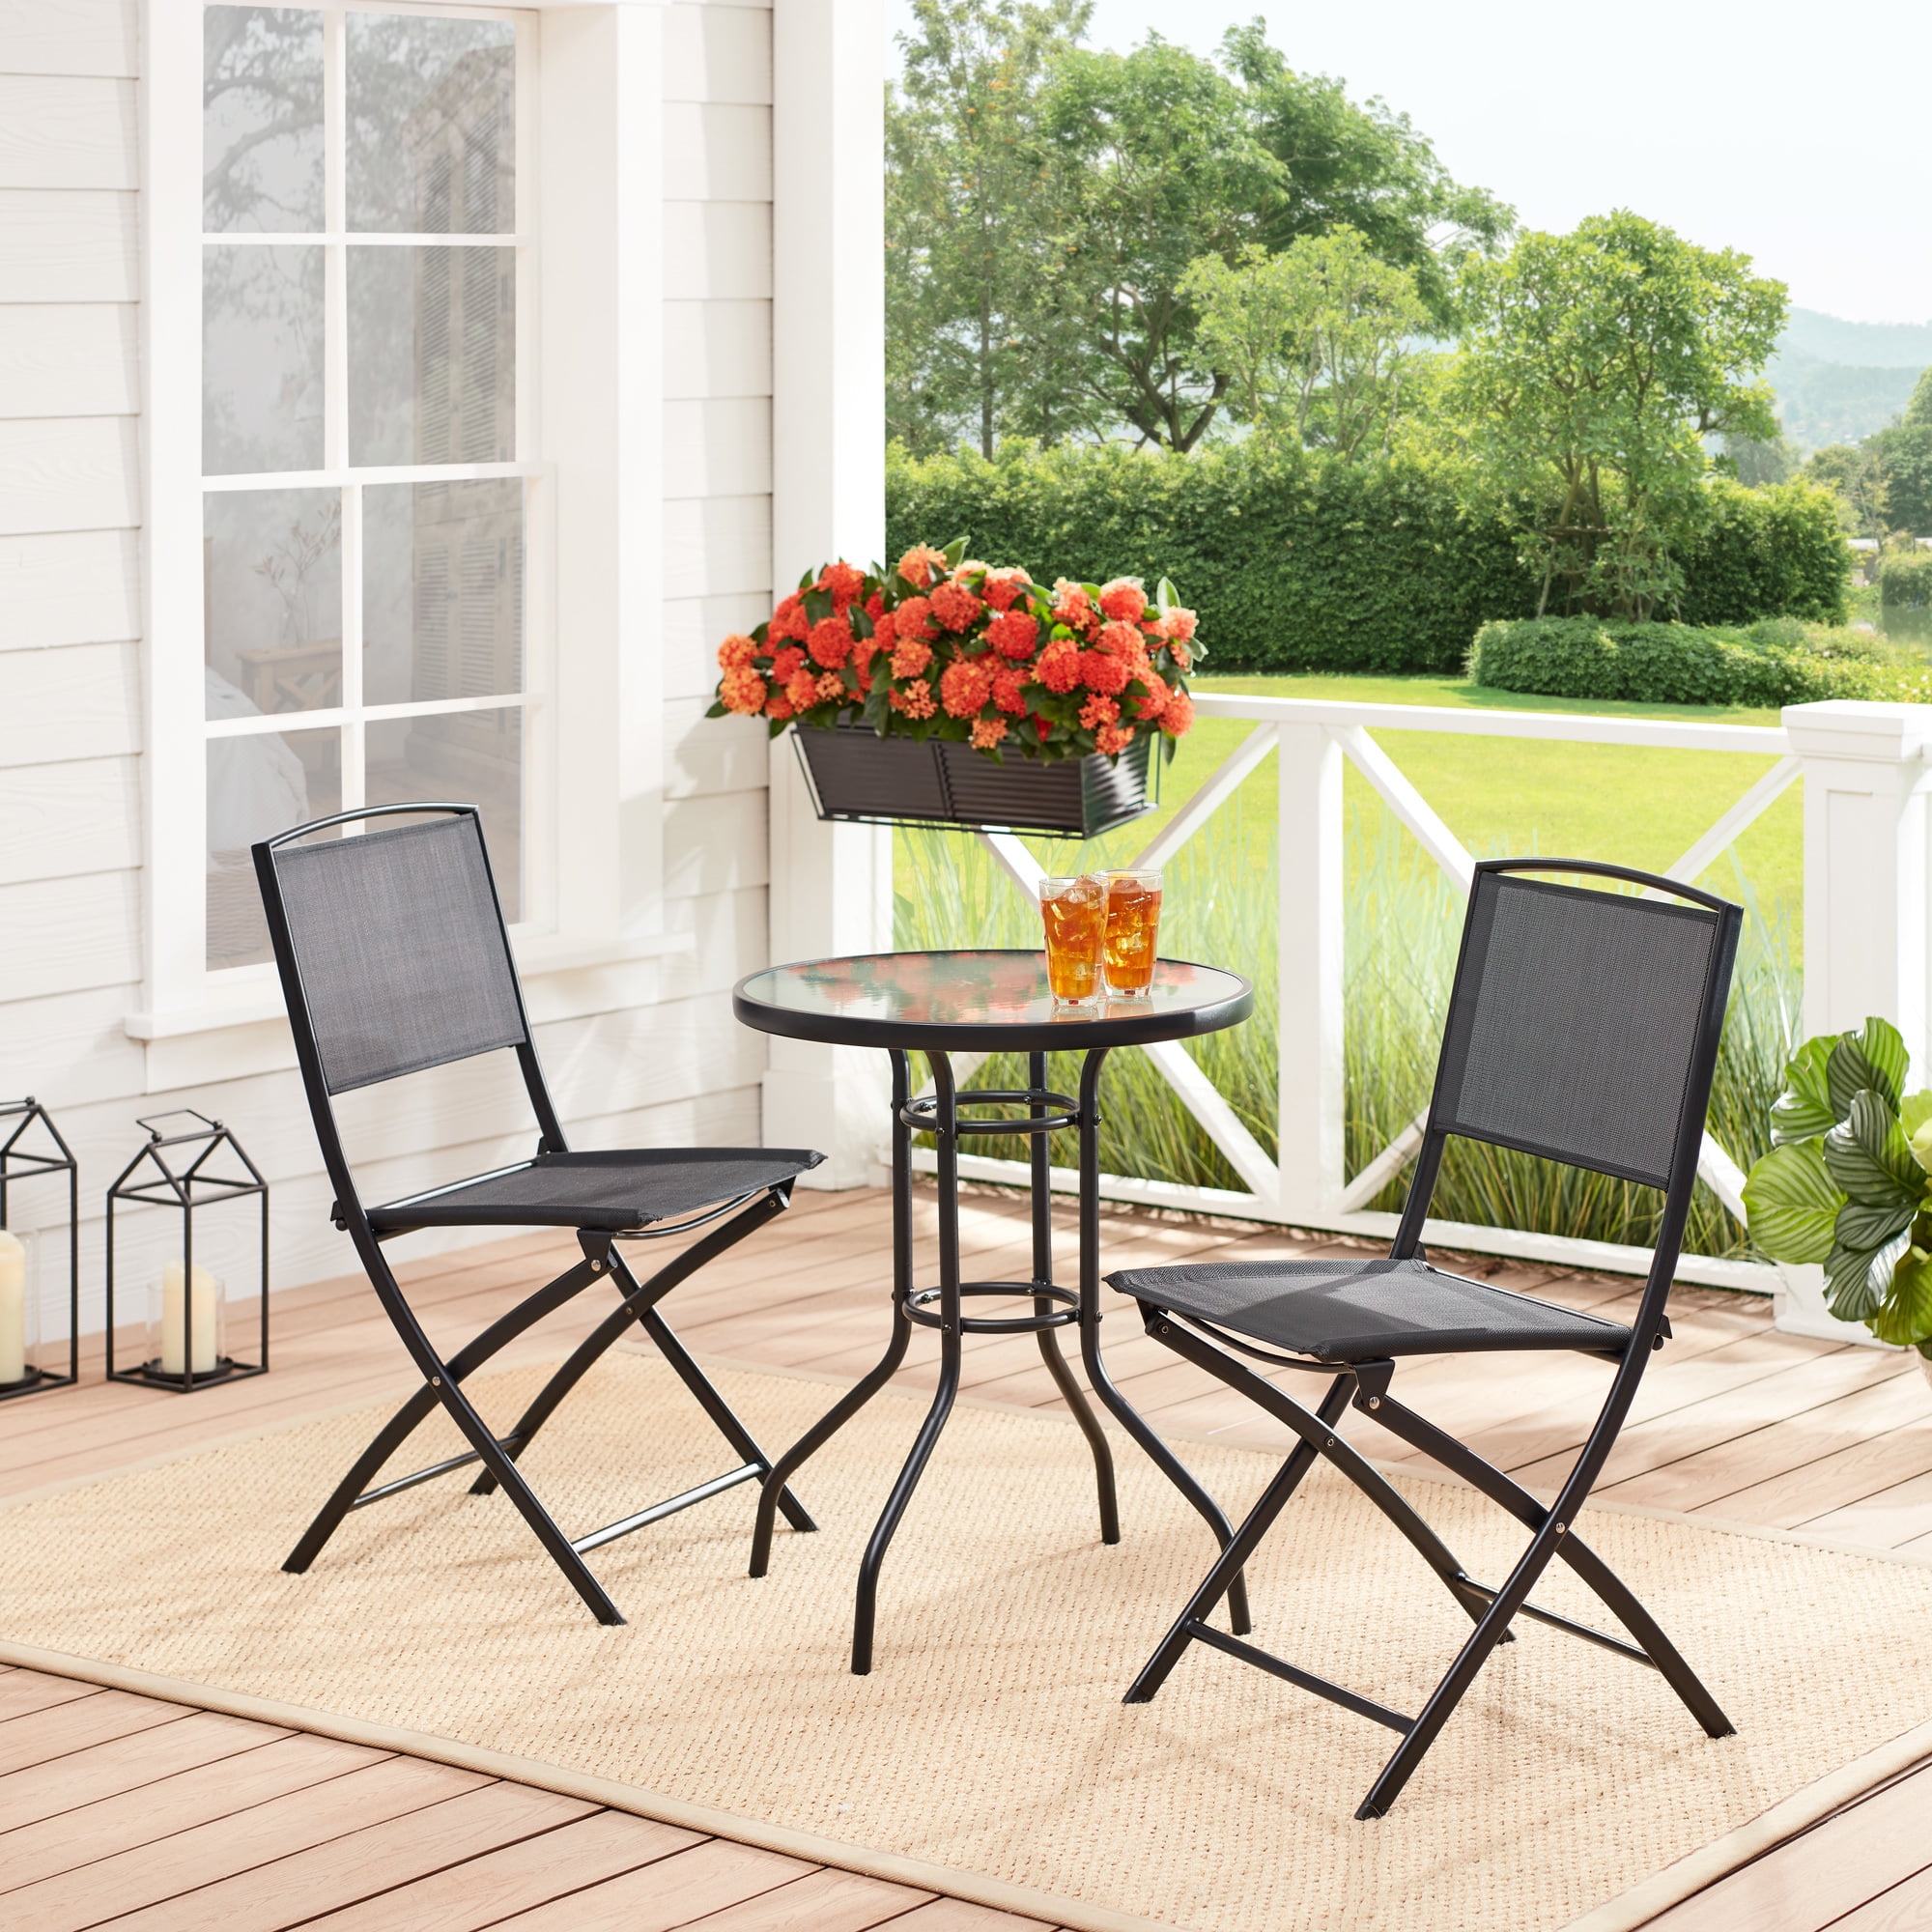 3 Pcs Bistro Set Garden Backyard Table Folding Chairs Outdoor Patio Furniture 